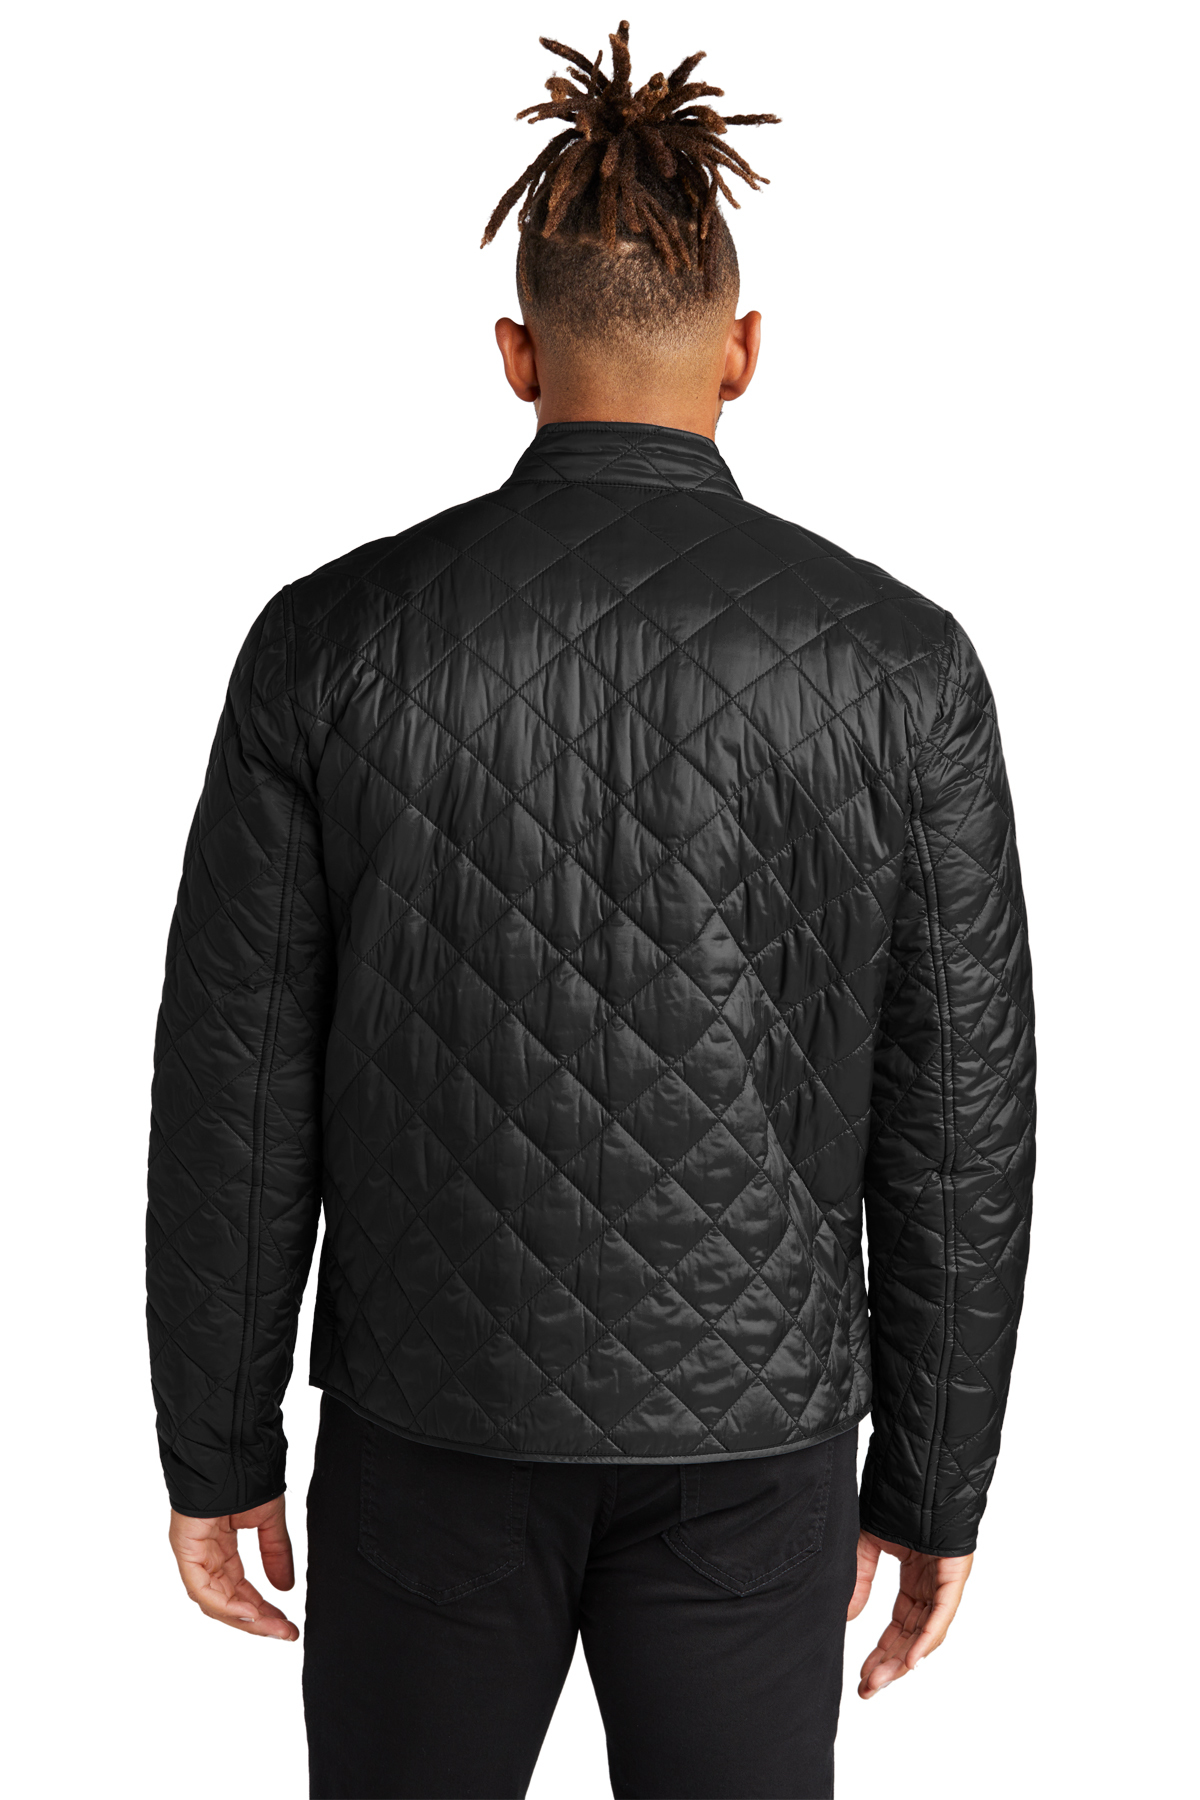 Mercer+Mettle Quilted Full-Zip Jacket | Product | SanMar